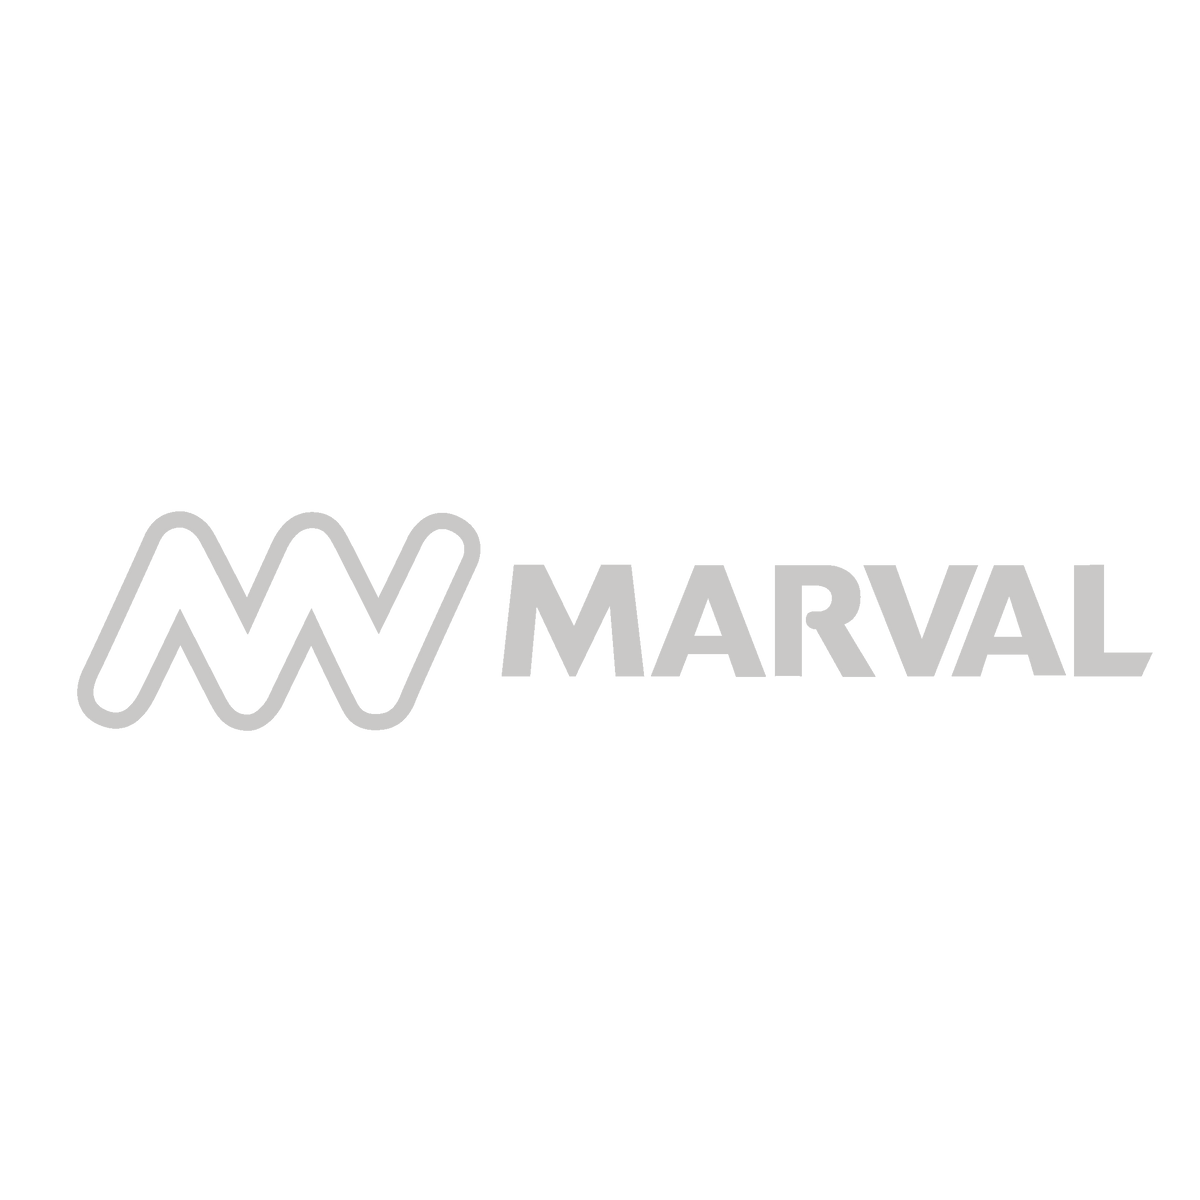 05_marval-01.png__PID:6020107a-1261-457b-a1d9-f11d7b224049